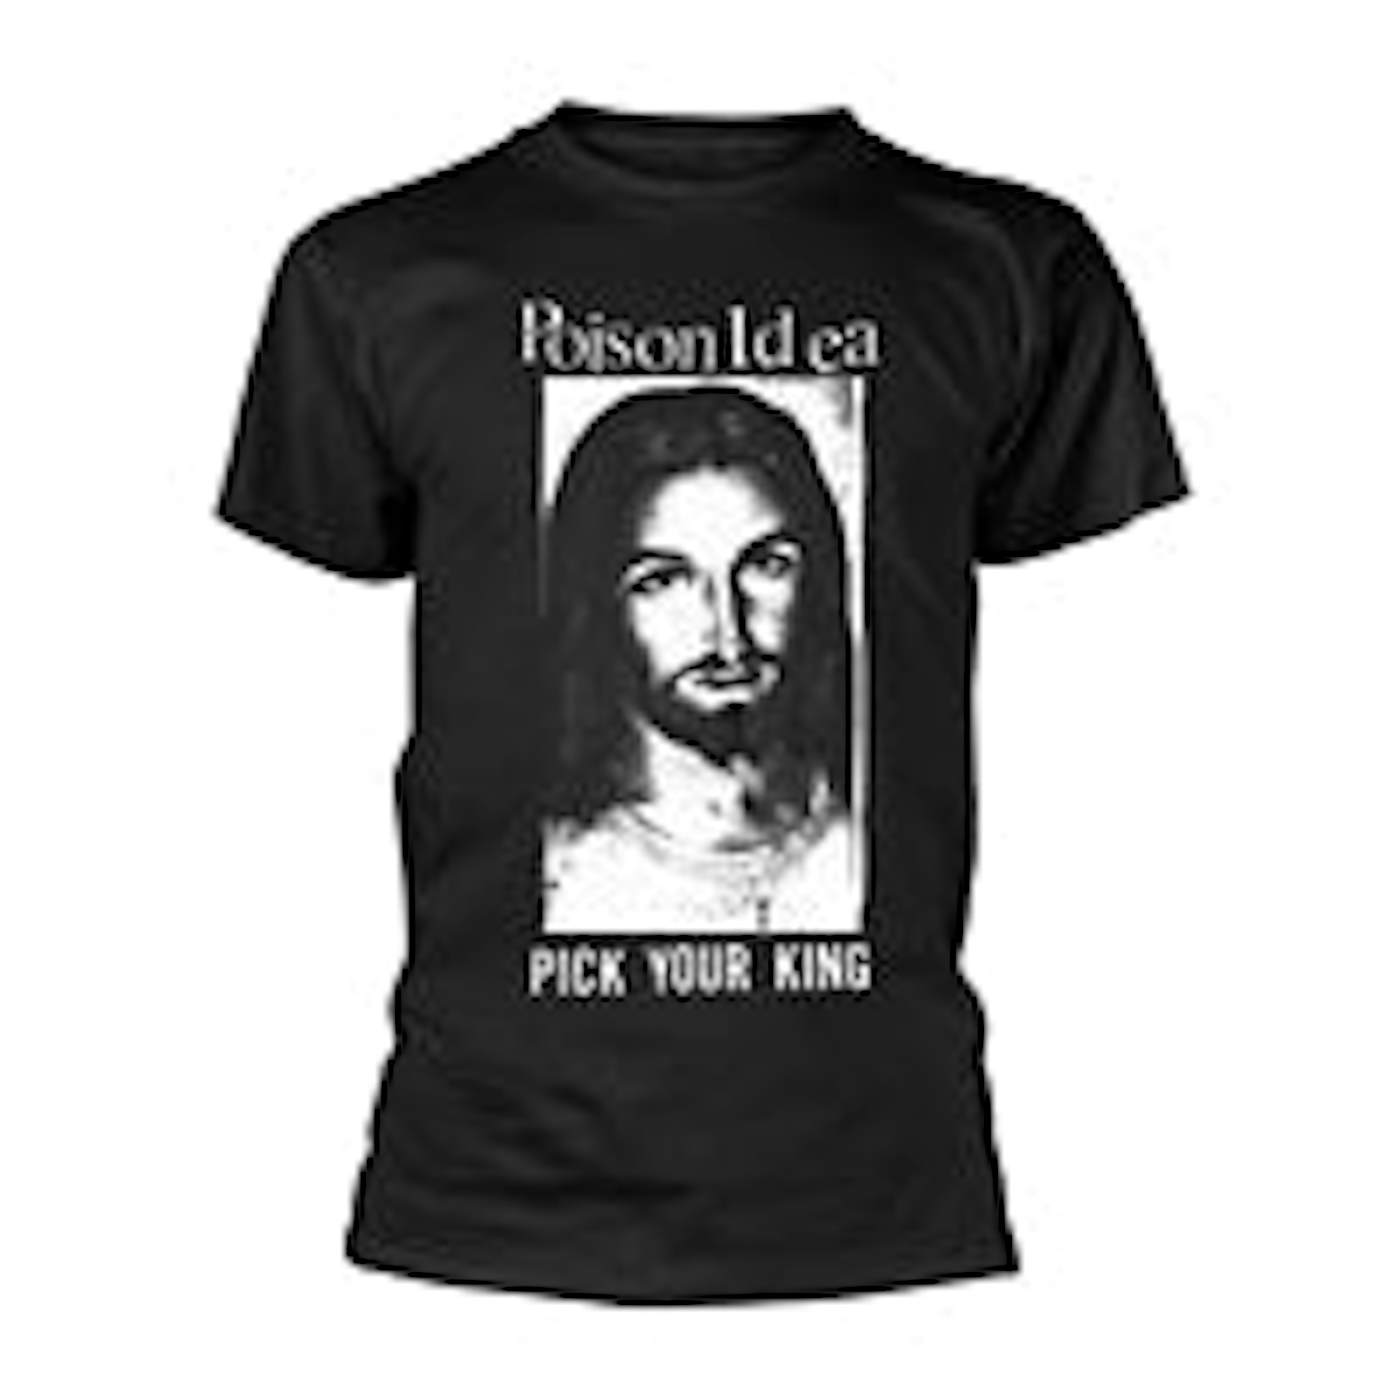 Poison Idea T Shirt - Pick Your King (Black)